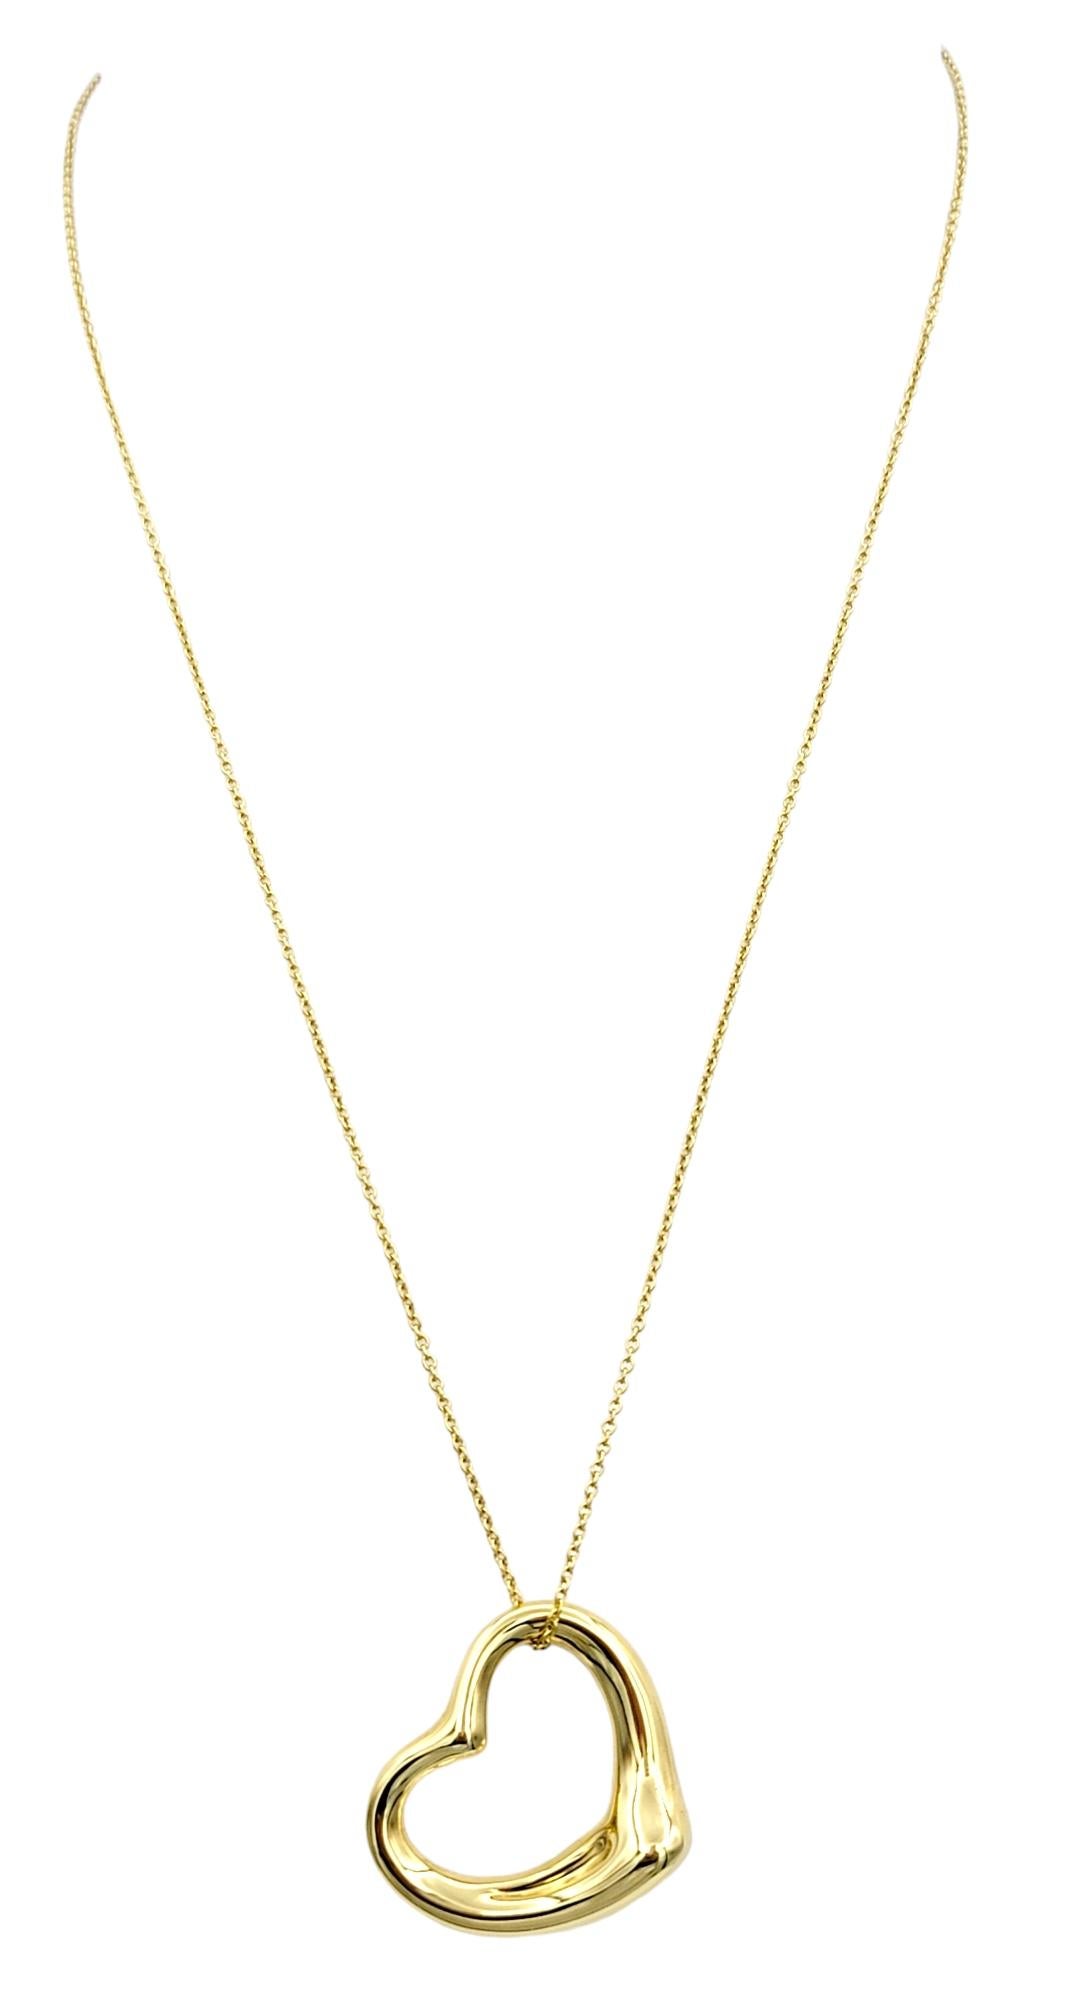 Contemporary Tiffany & Co. Elsa Peretti Open Heart Pendant Necklace in 18 Karat Yellow Gold For Sale